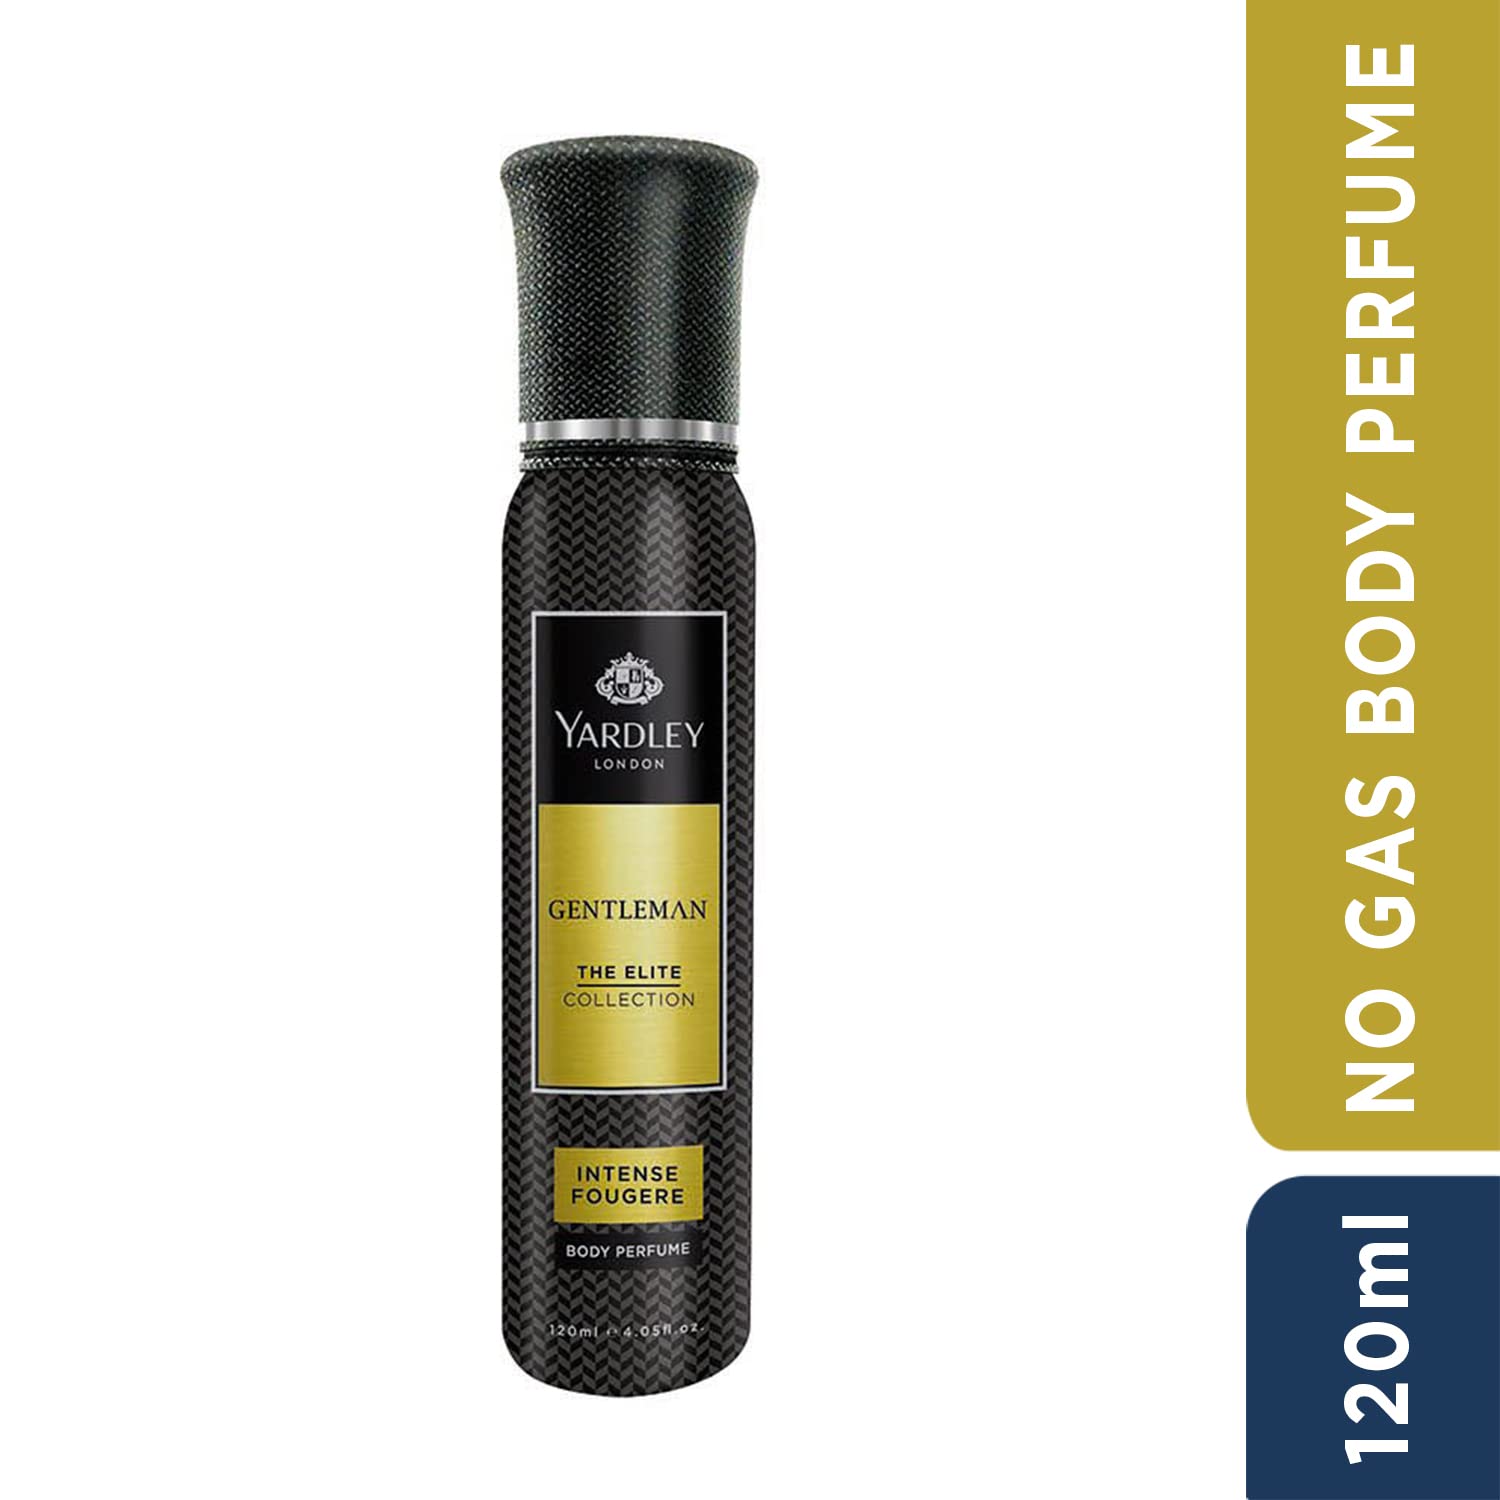 Yardley London Gentleman Intense Fougere Body Perfume| The Elite Collection| No Gas Deodorant for Men| Men’s Body Perfume| 120ml